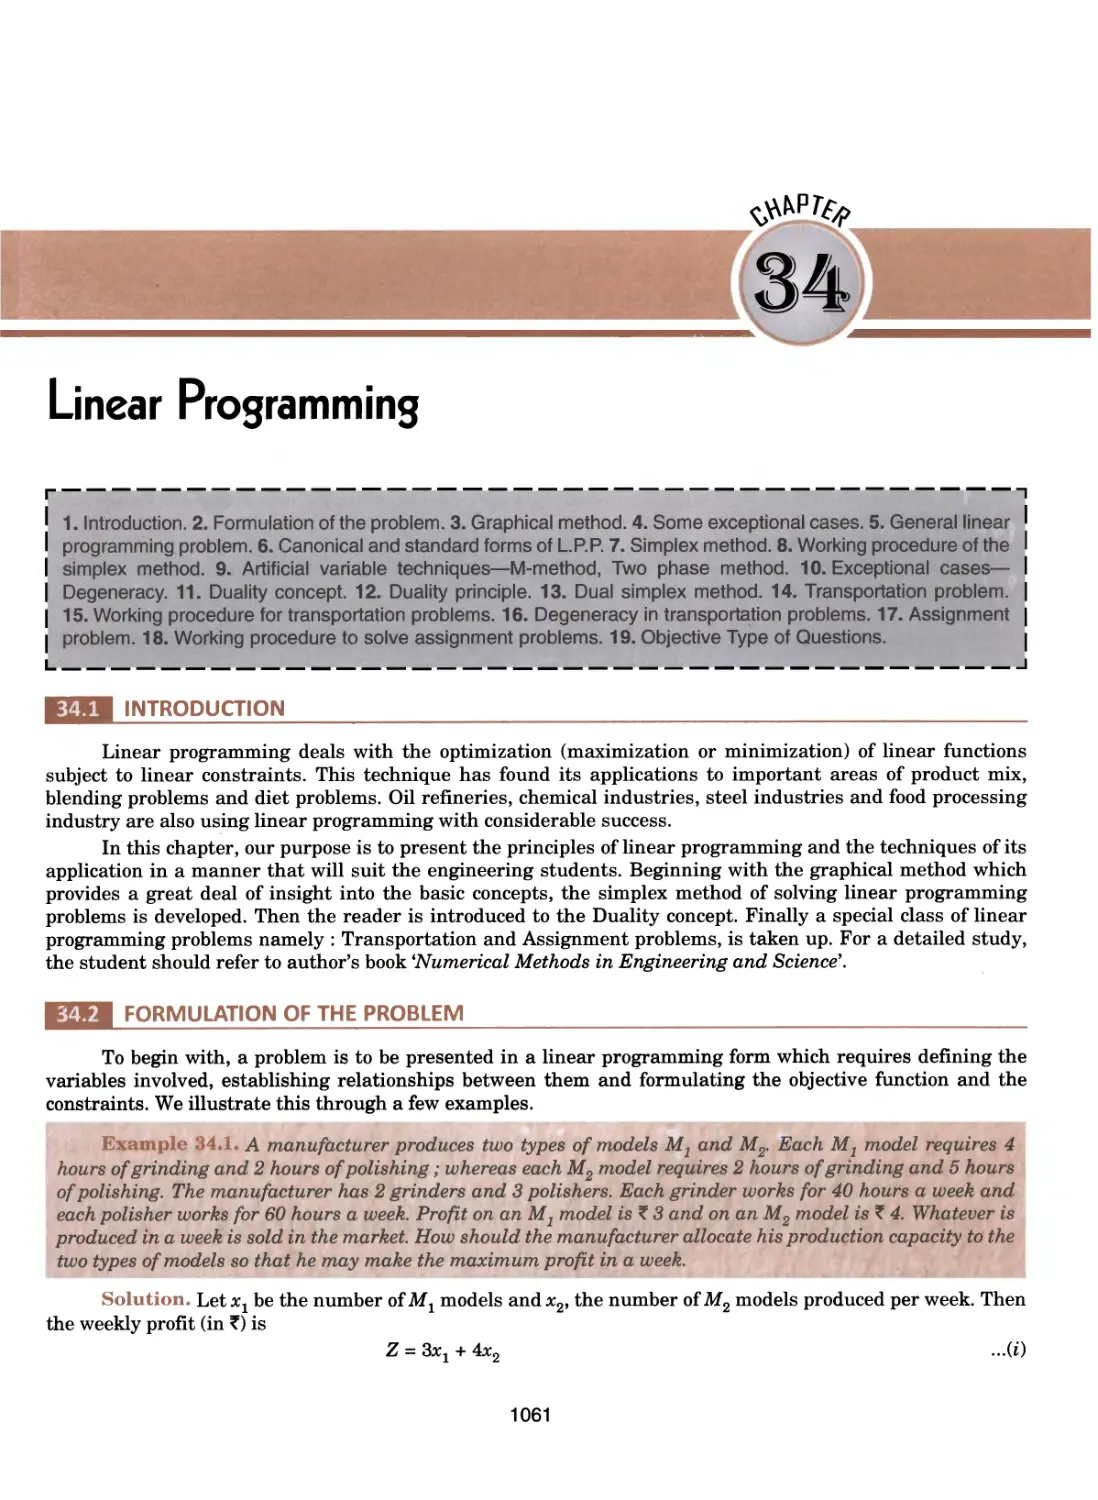 34.Linear Programming 1061